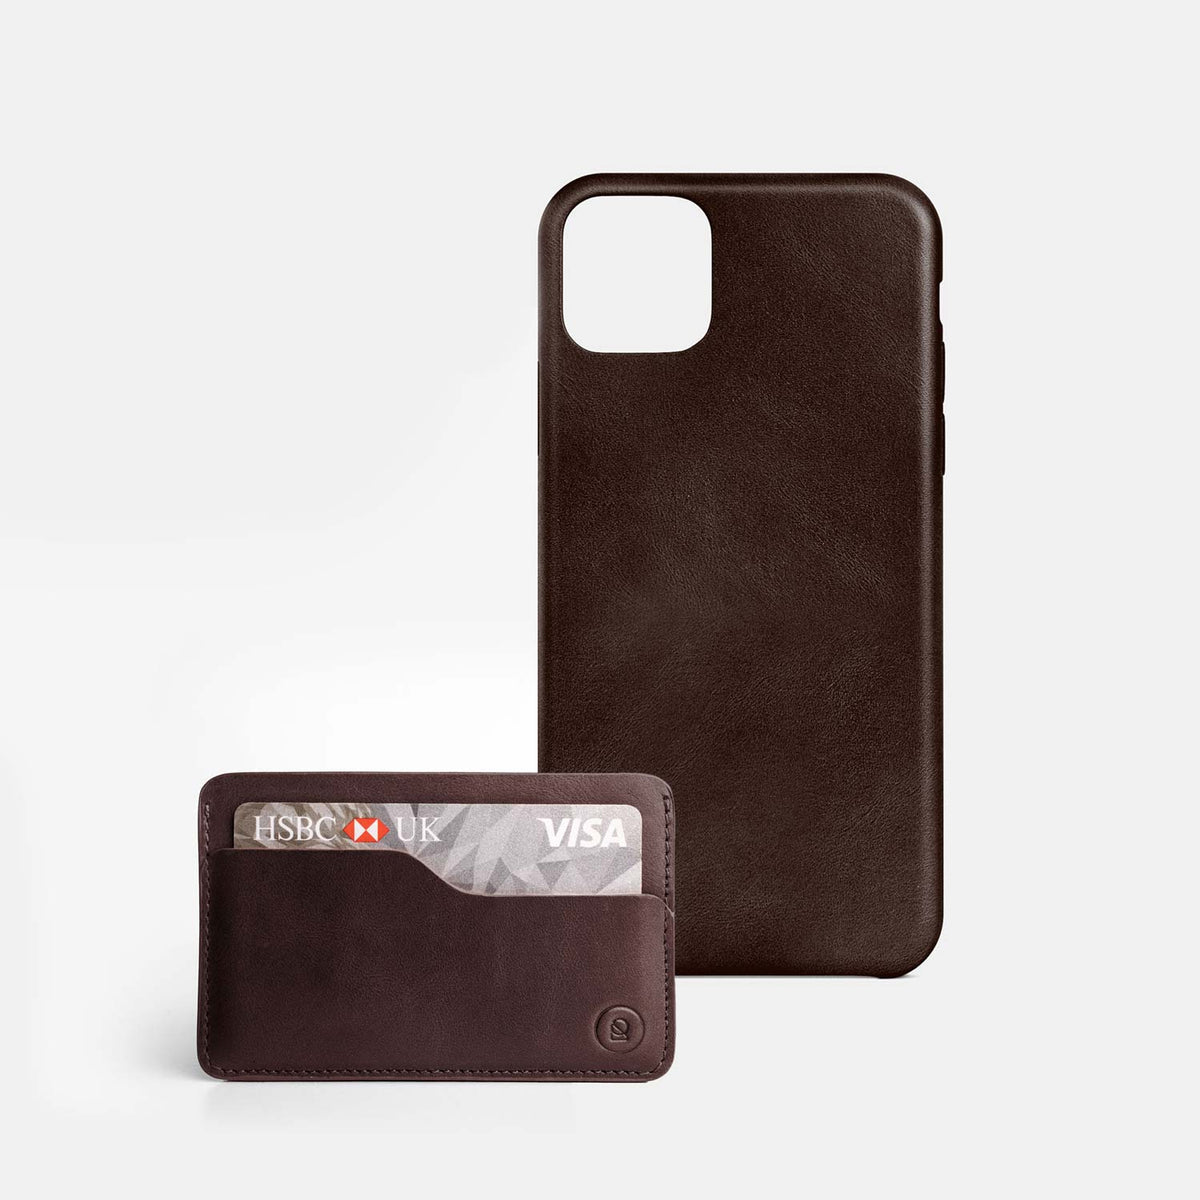 Leather iPhone 12 Shell Case - Dark Brown - RYAN London